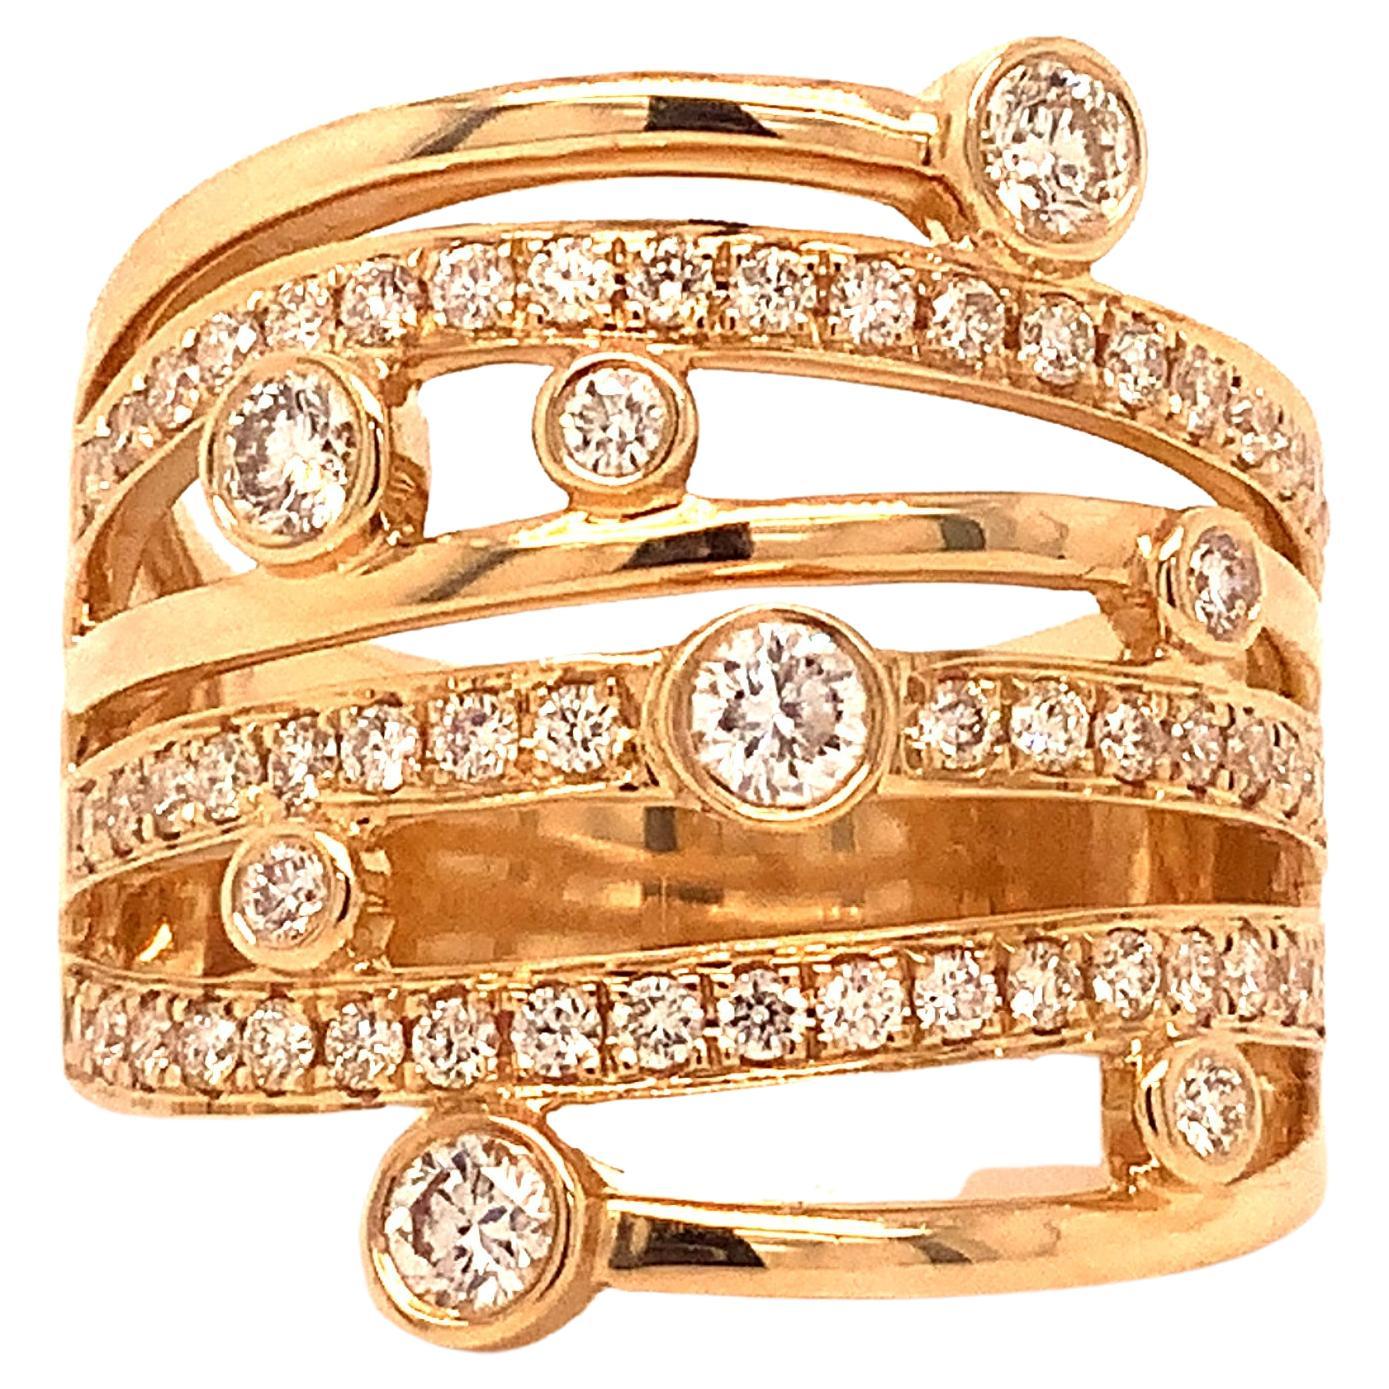 Roman + Jules Right Hand Diamond Ring Set in 14 Karat Yellow Gold